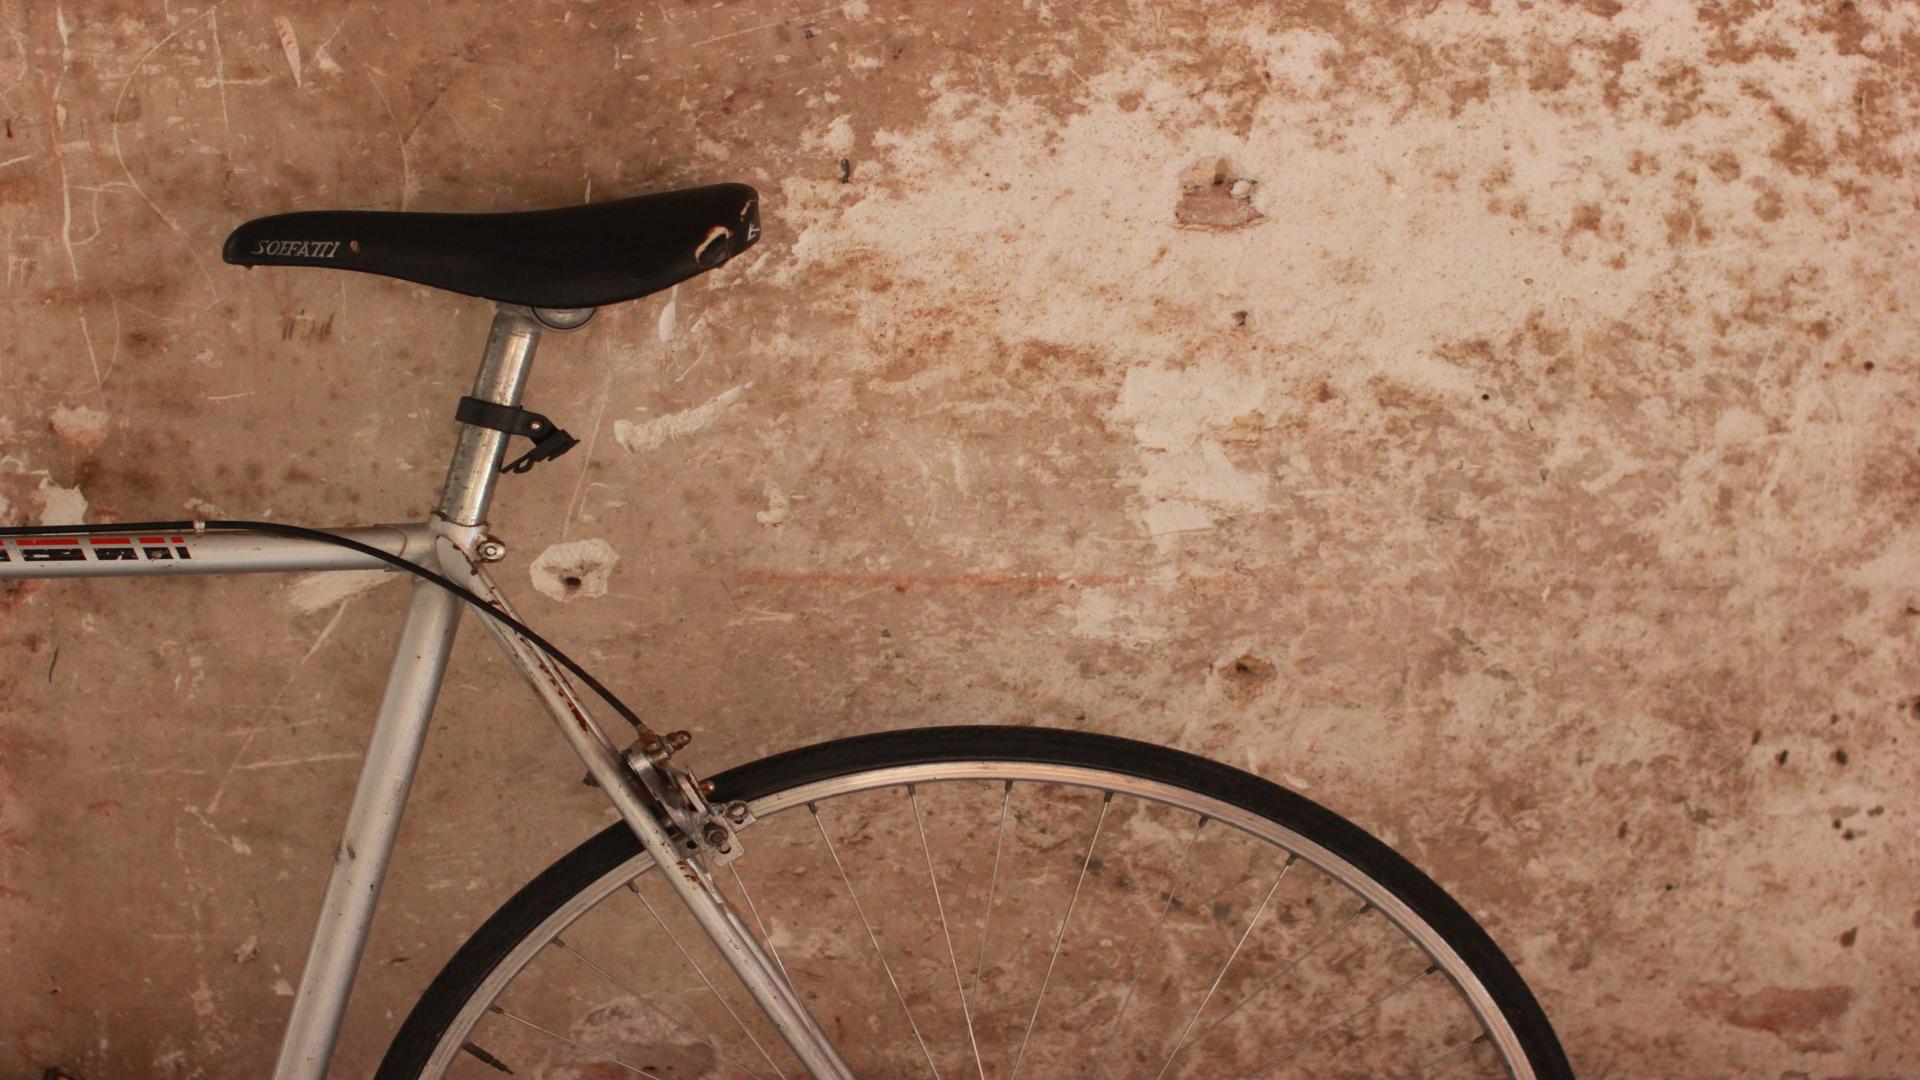 LVBU E-Bike Kit: A Worthy Investment for Theft Prevention